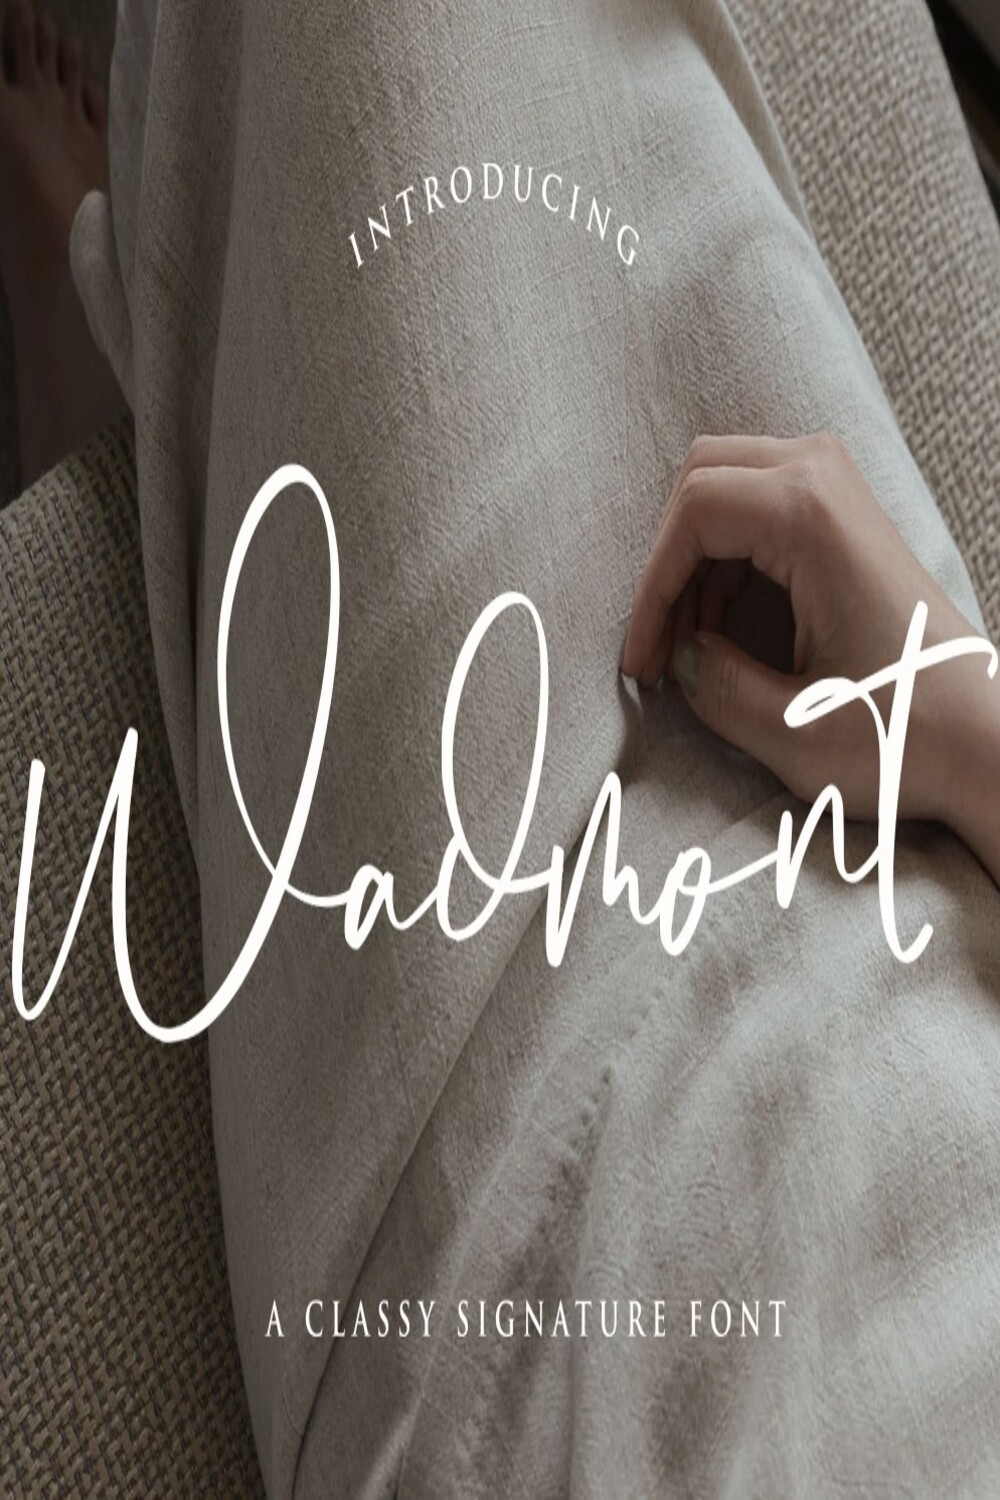 Wadmont Aesthetic Signature Font pinterest image.